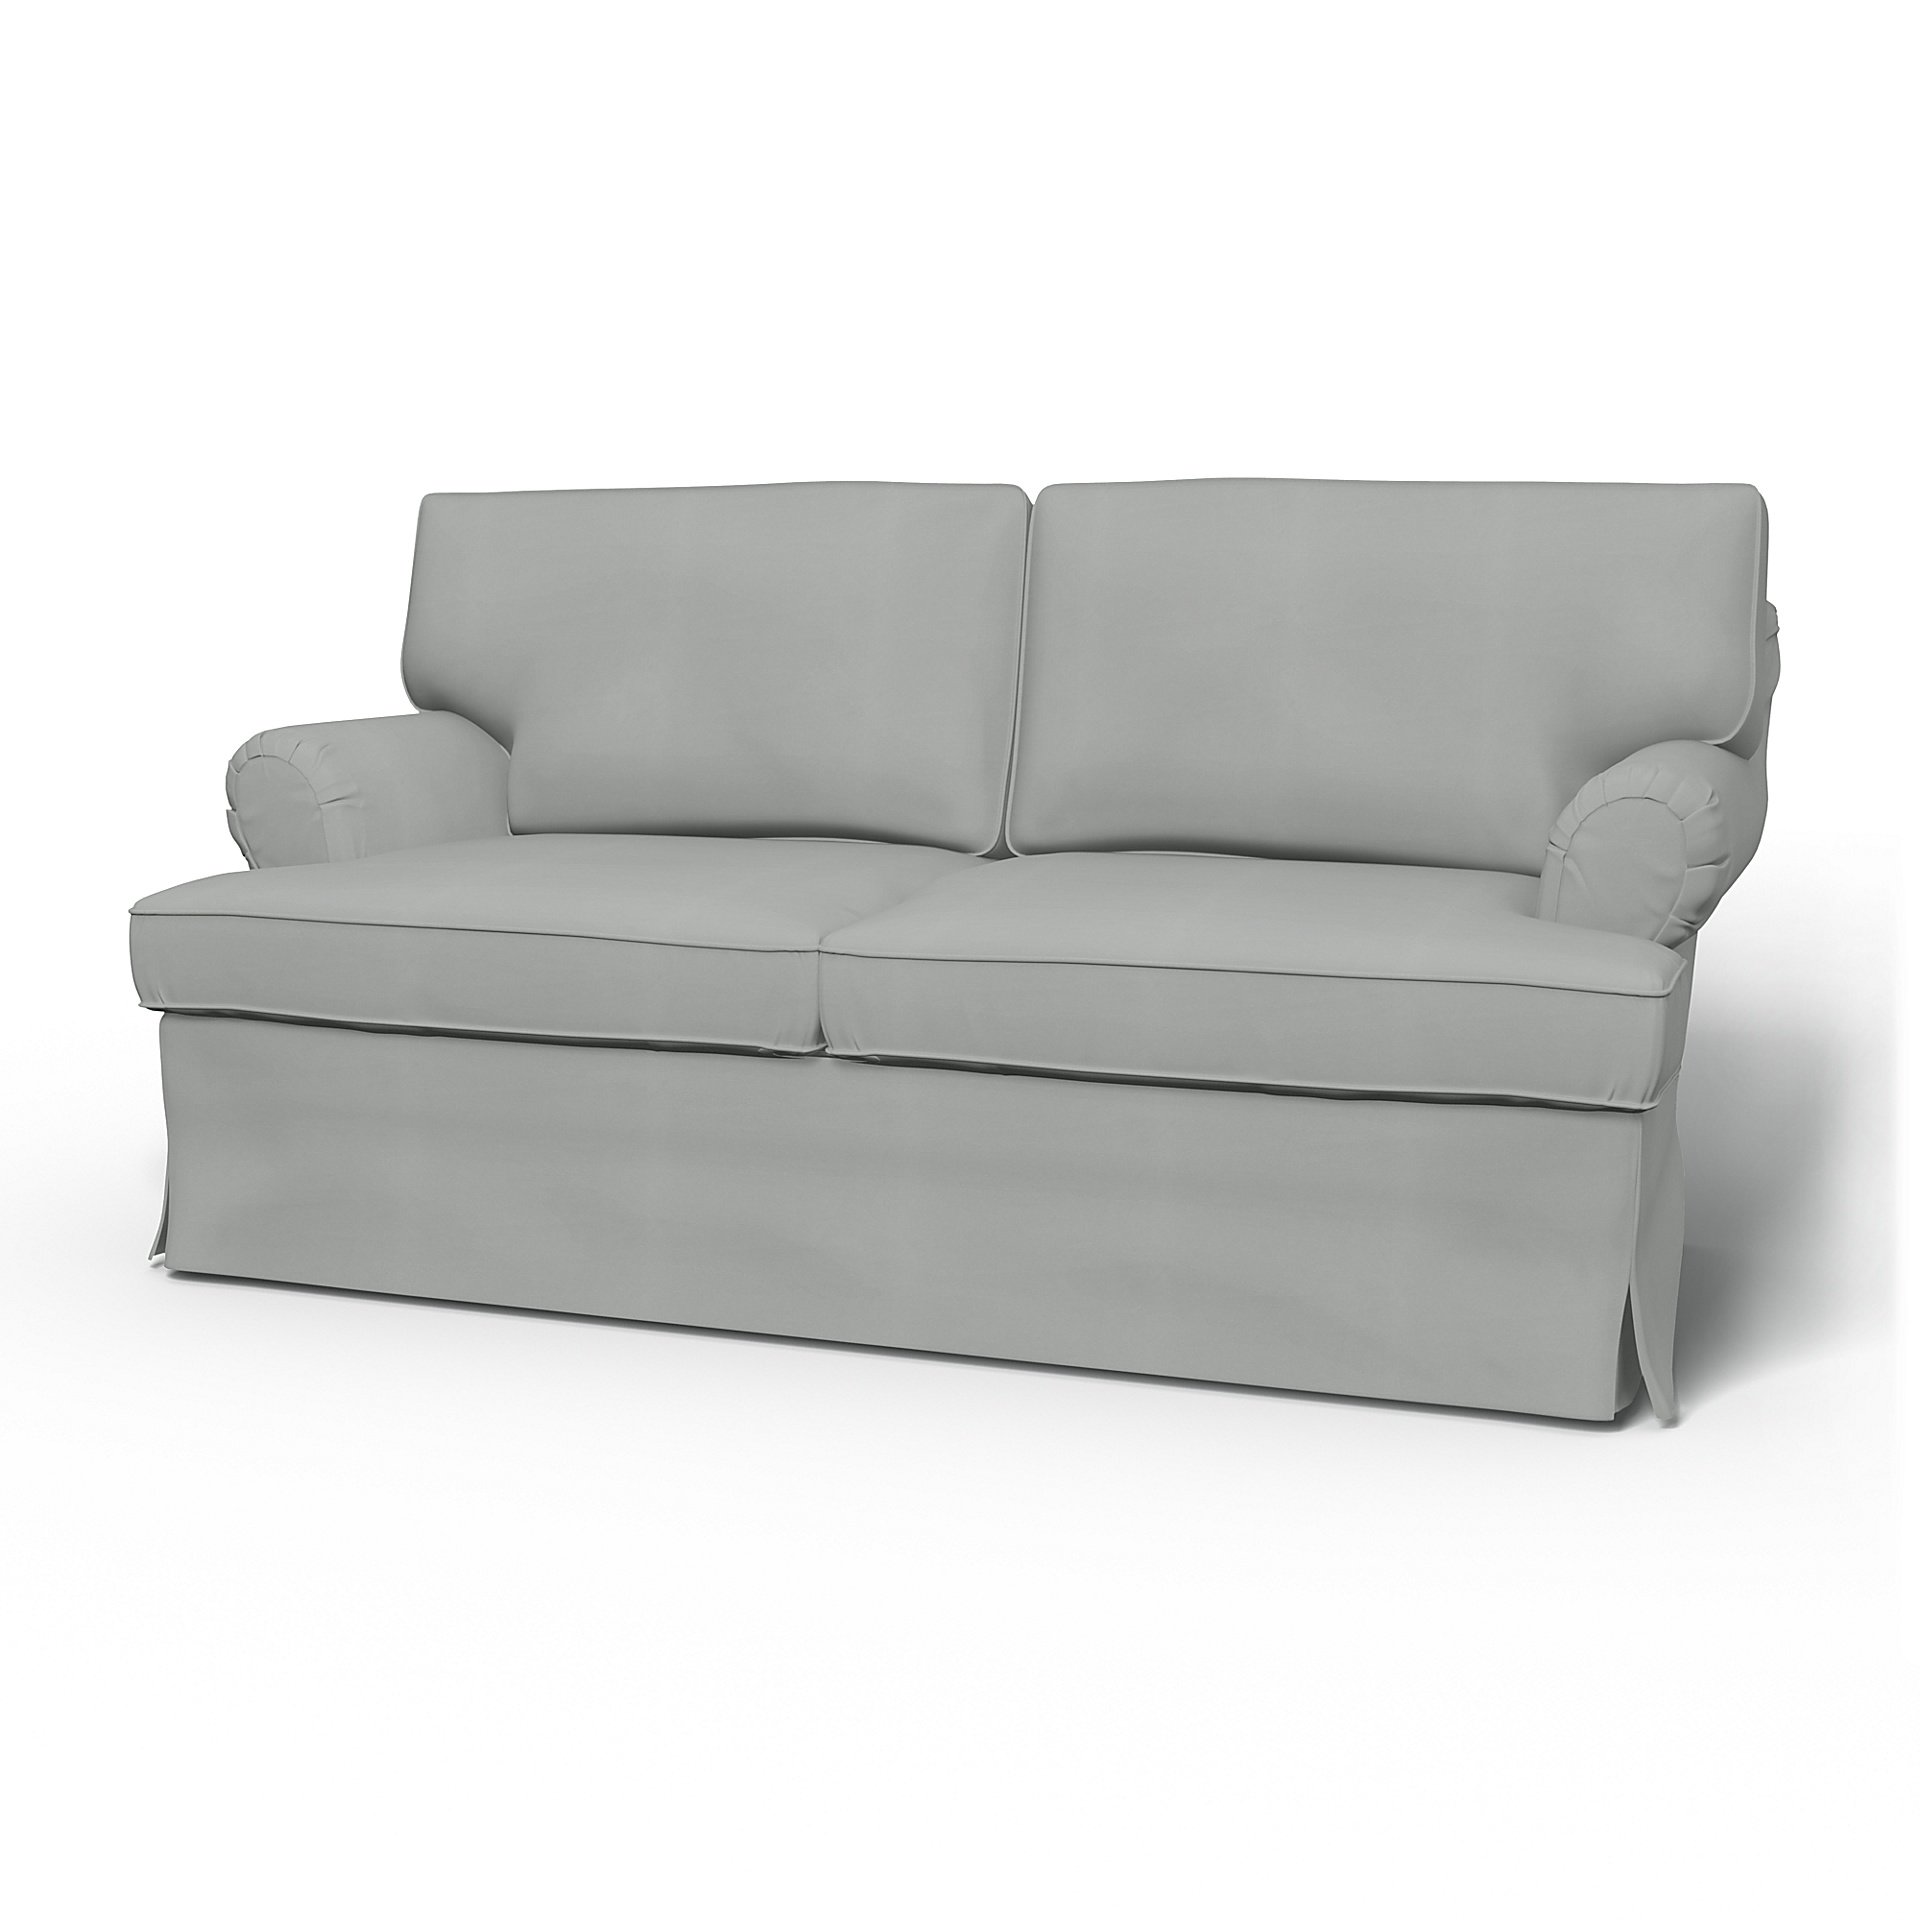 IKEA - Stockholm 2 Seater Sofa Cover (1994-2000), Silver Grey, Cotton - Bemz